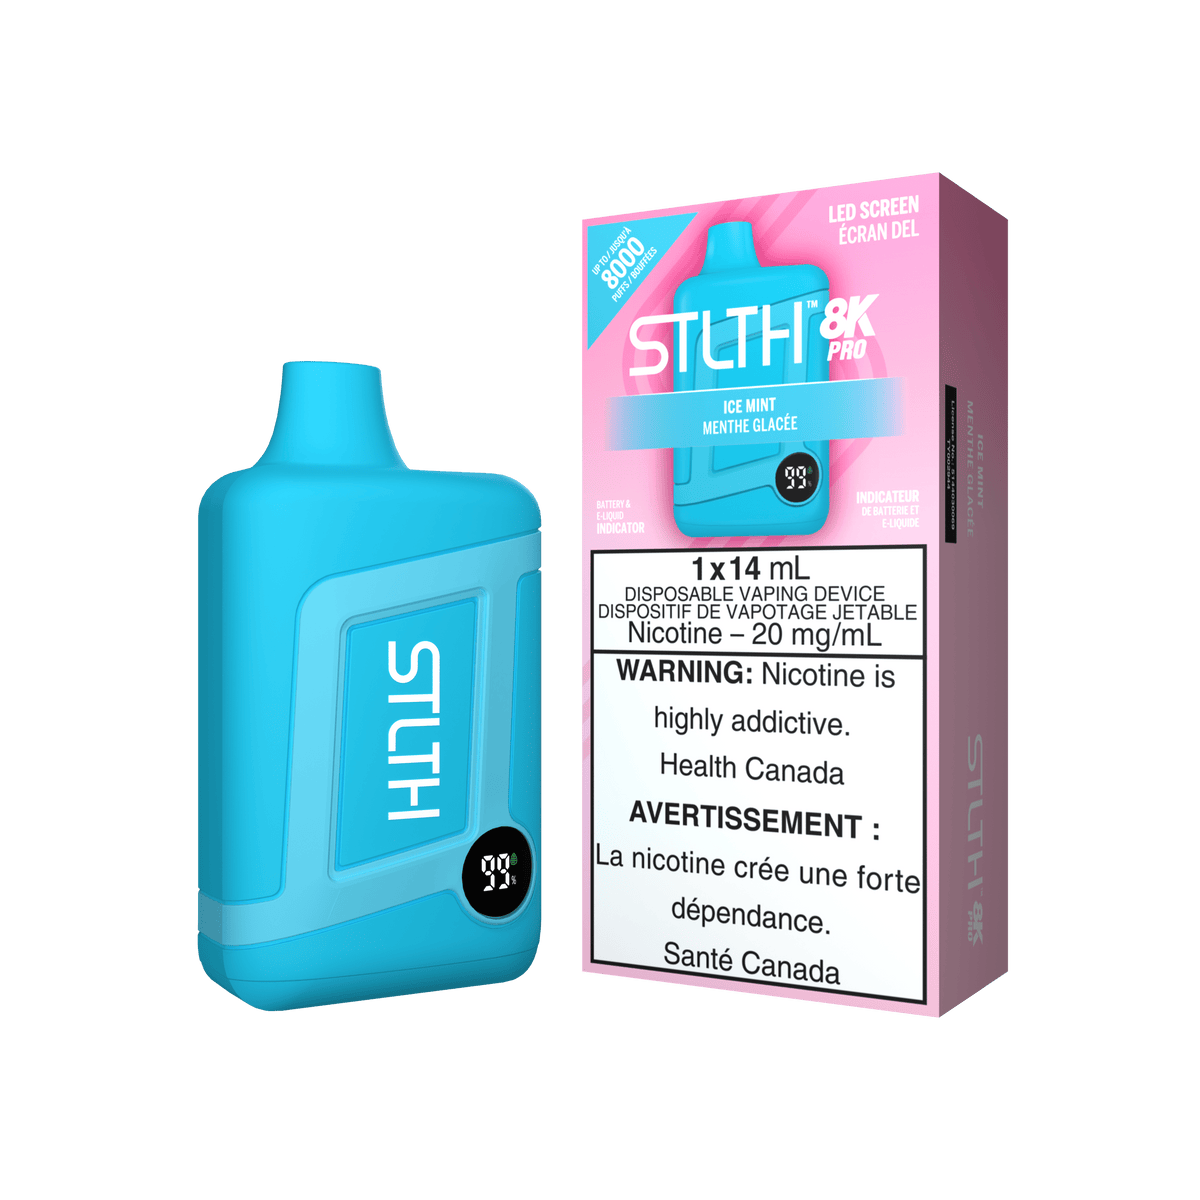 STLTH 8K Pro - Ice Mint Disposable Vape available on Canada online vape shop